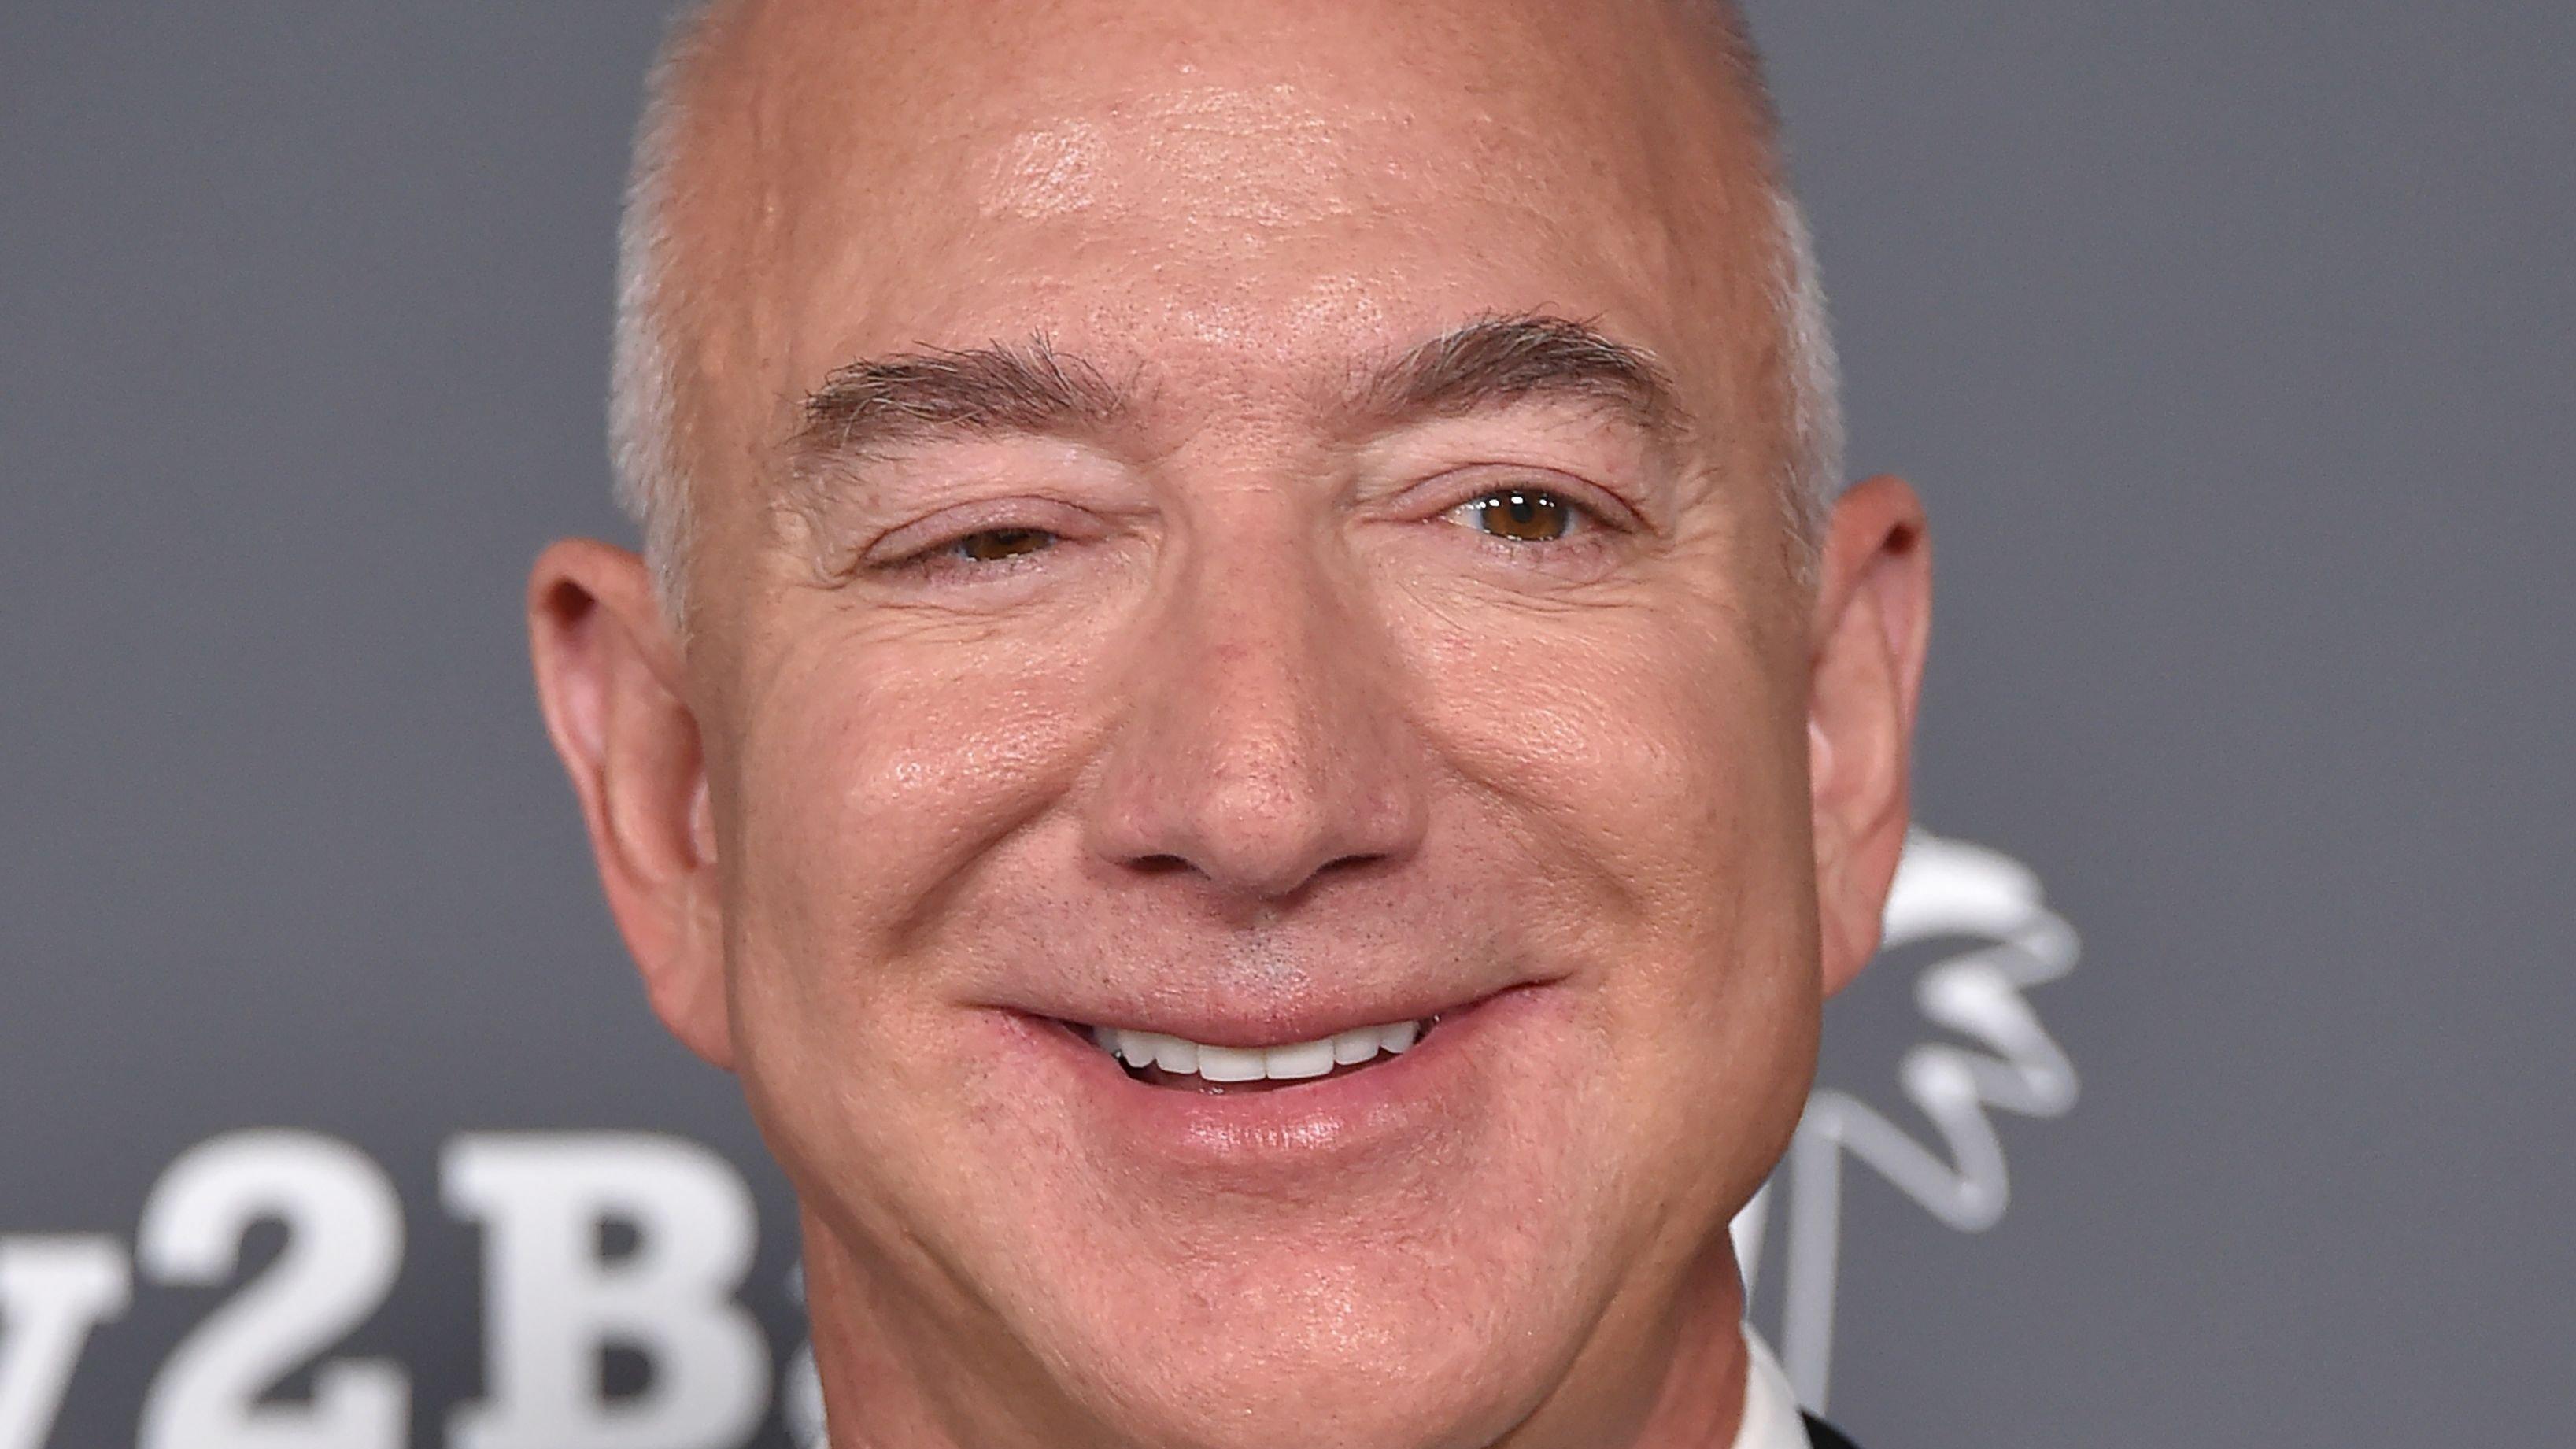 Amazon founder Jeff Bezos looks on